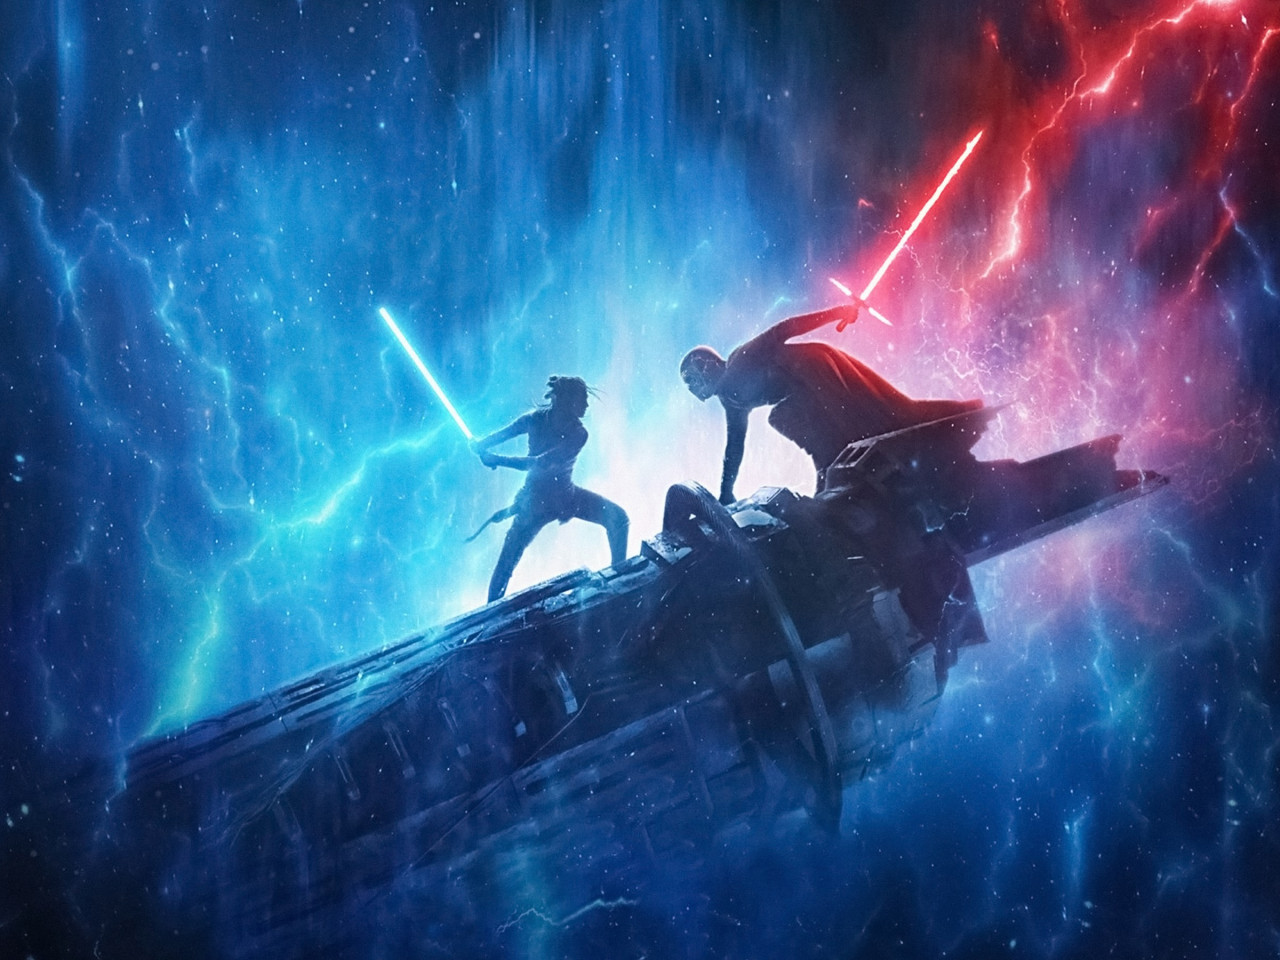 Download wallpaper: Star Wars: The Rise of Skywalker 1280x960